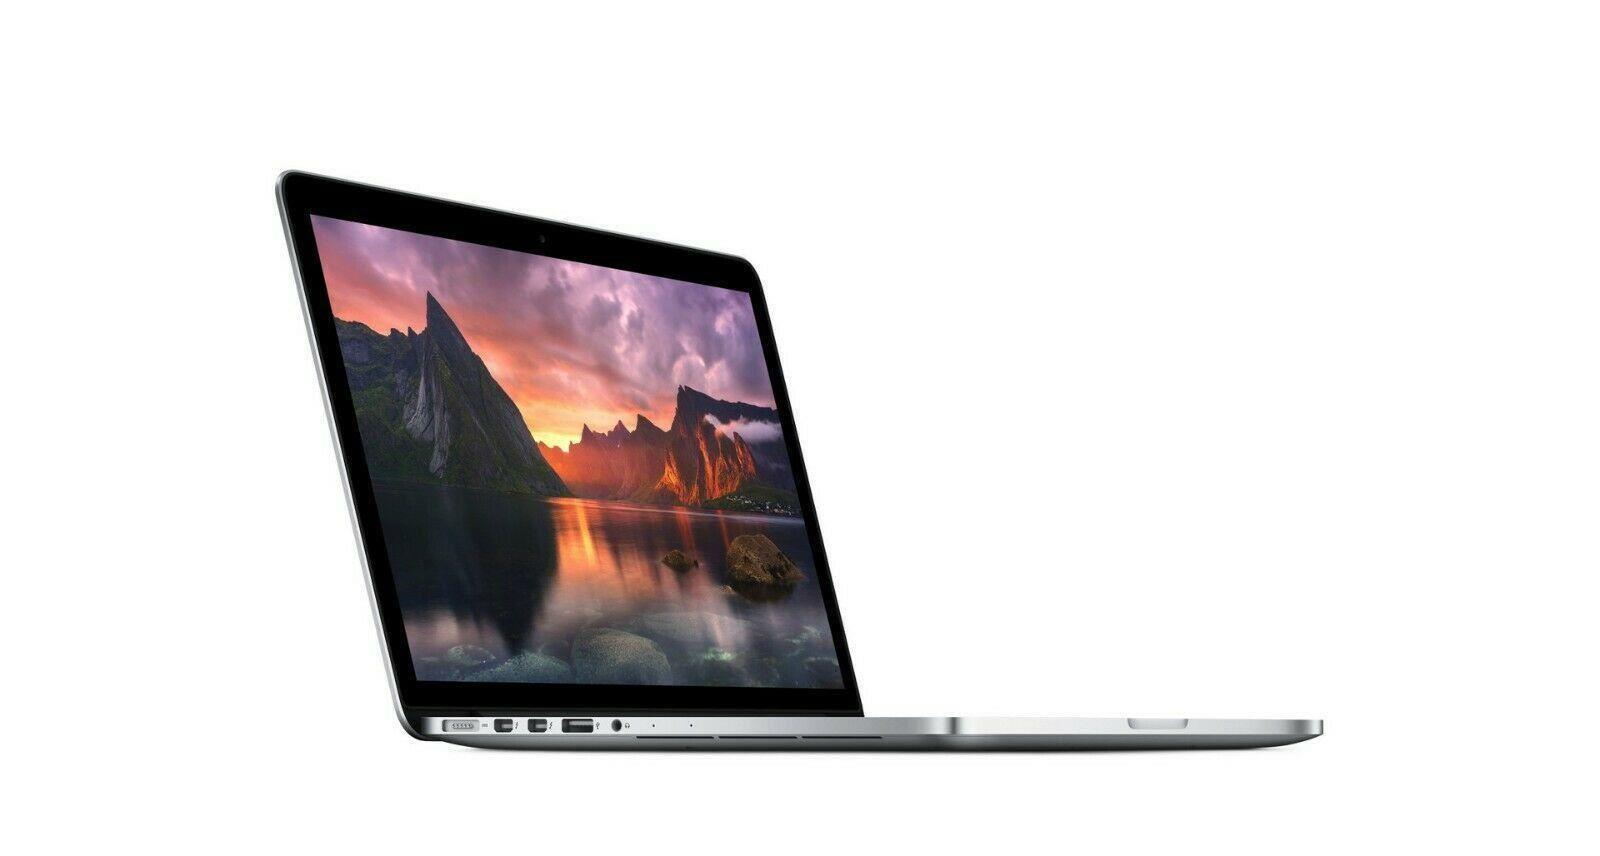 Apple MacBook Pro 13" 2015 i7-5557U 256GB 8GB Slim Portable Silver Laptop C1